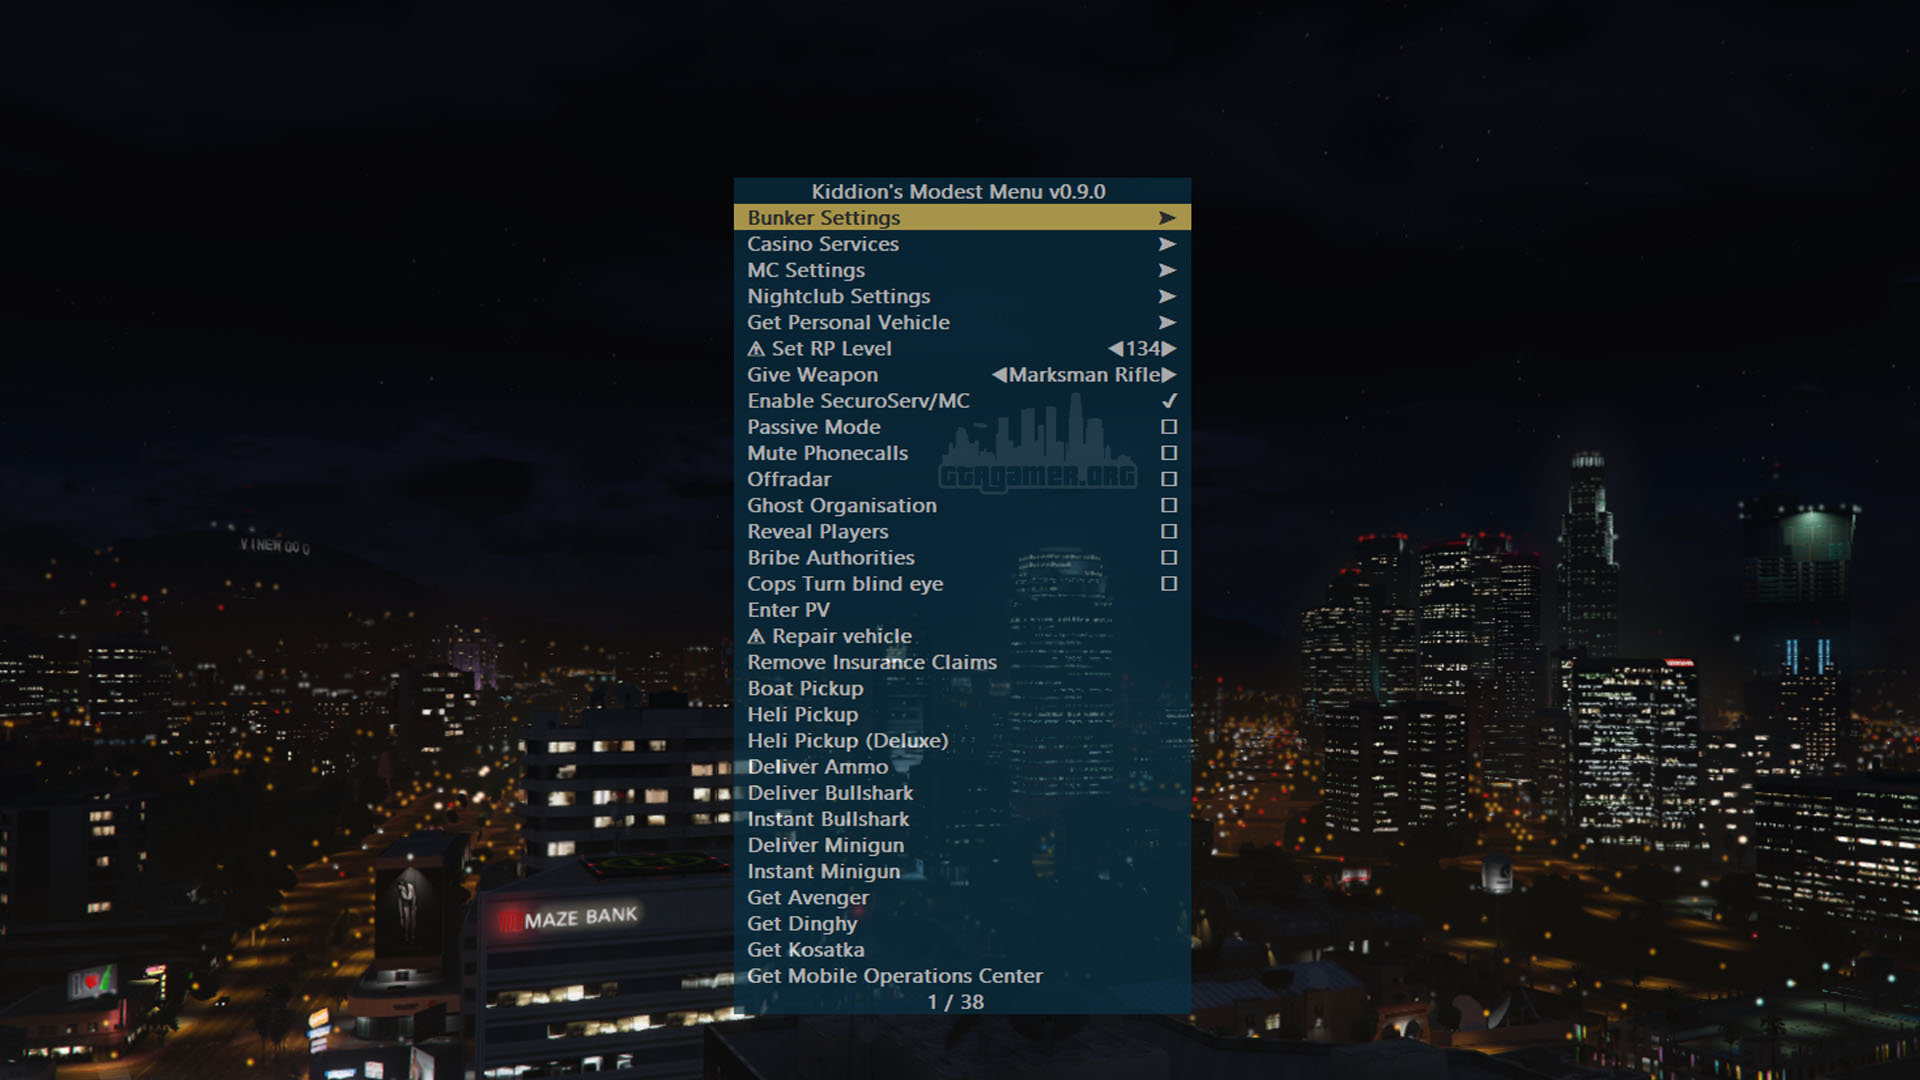 Modest menu gta 5 новая версия (120) фото